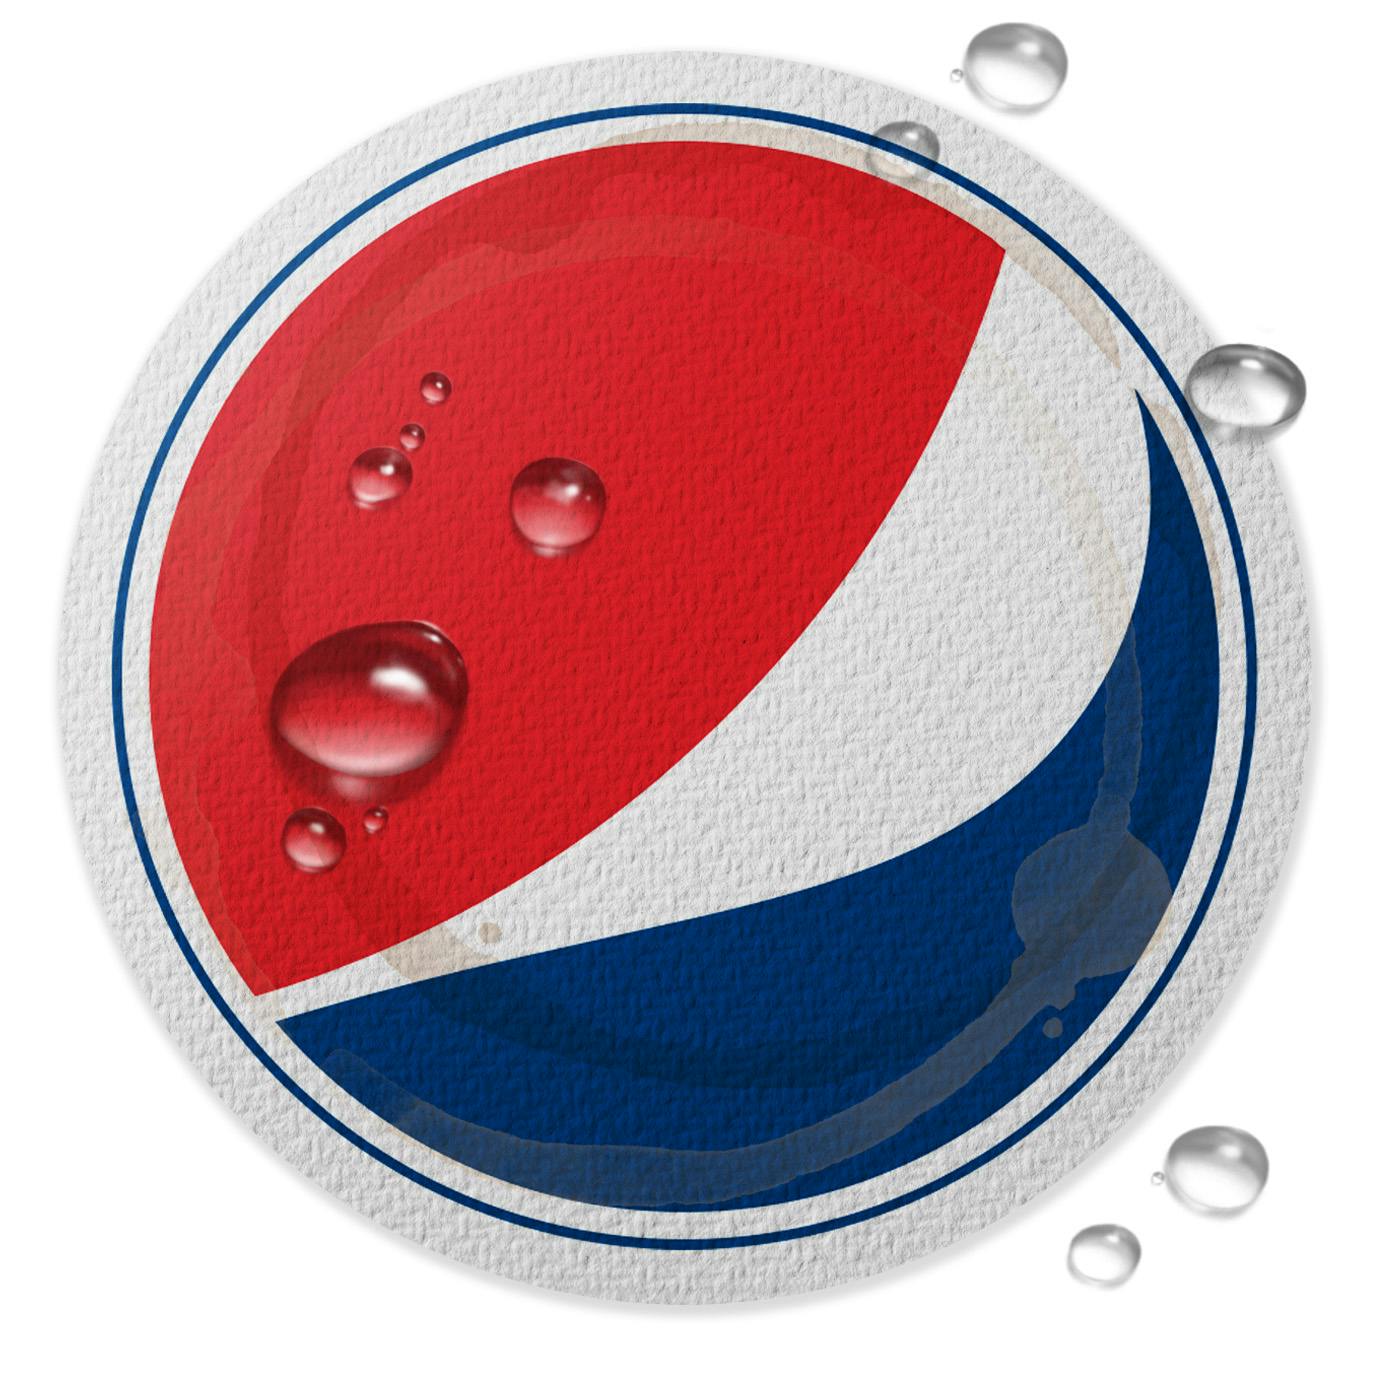 Episode 73: Pepsi, Tropicana and the Challenge of Good Design